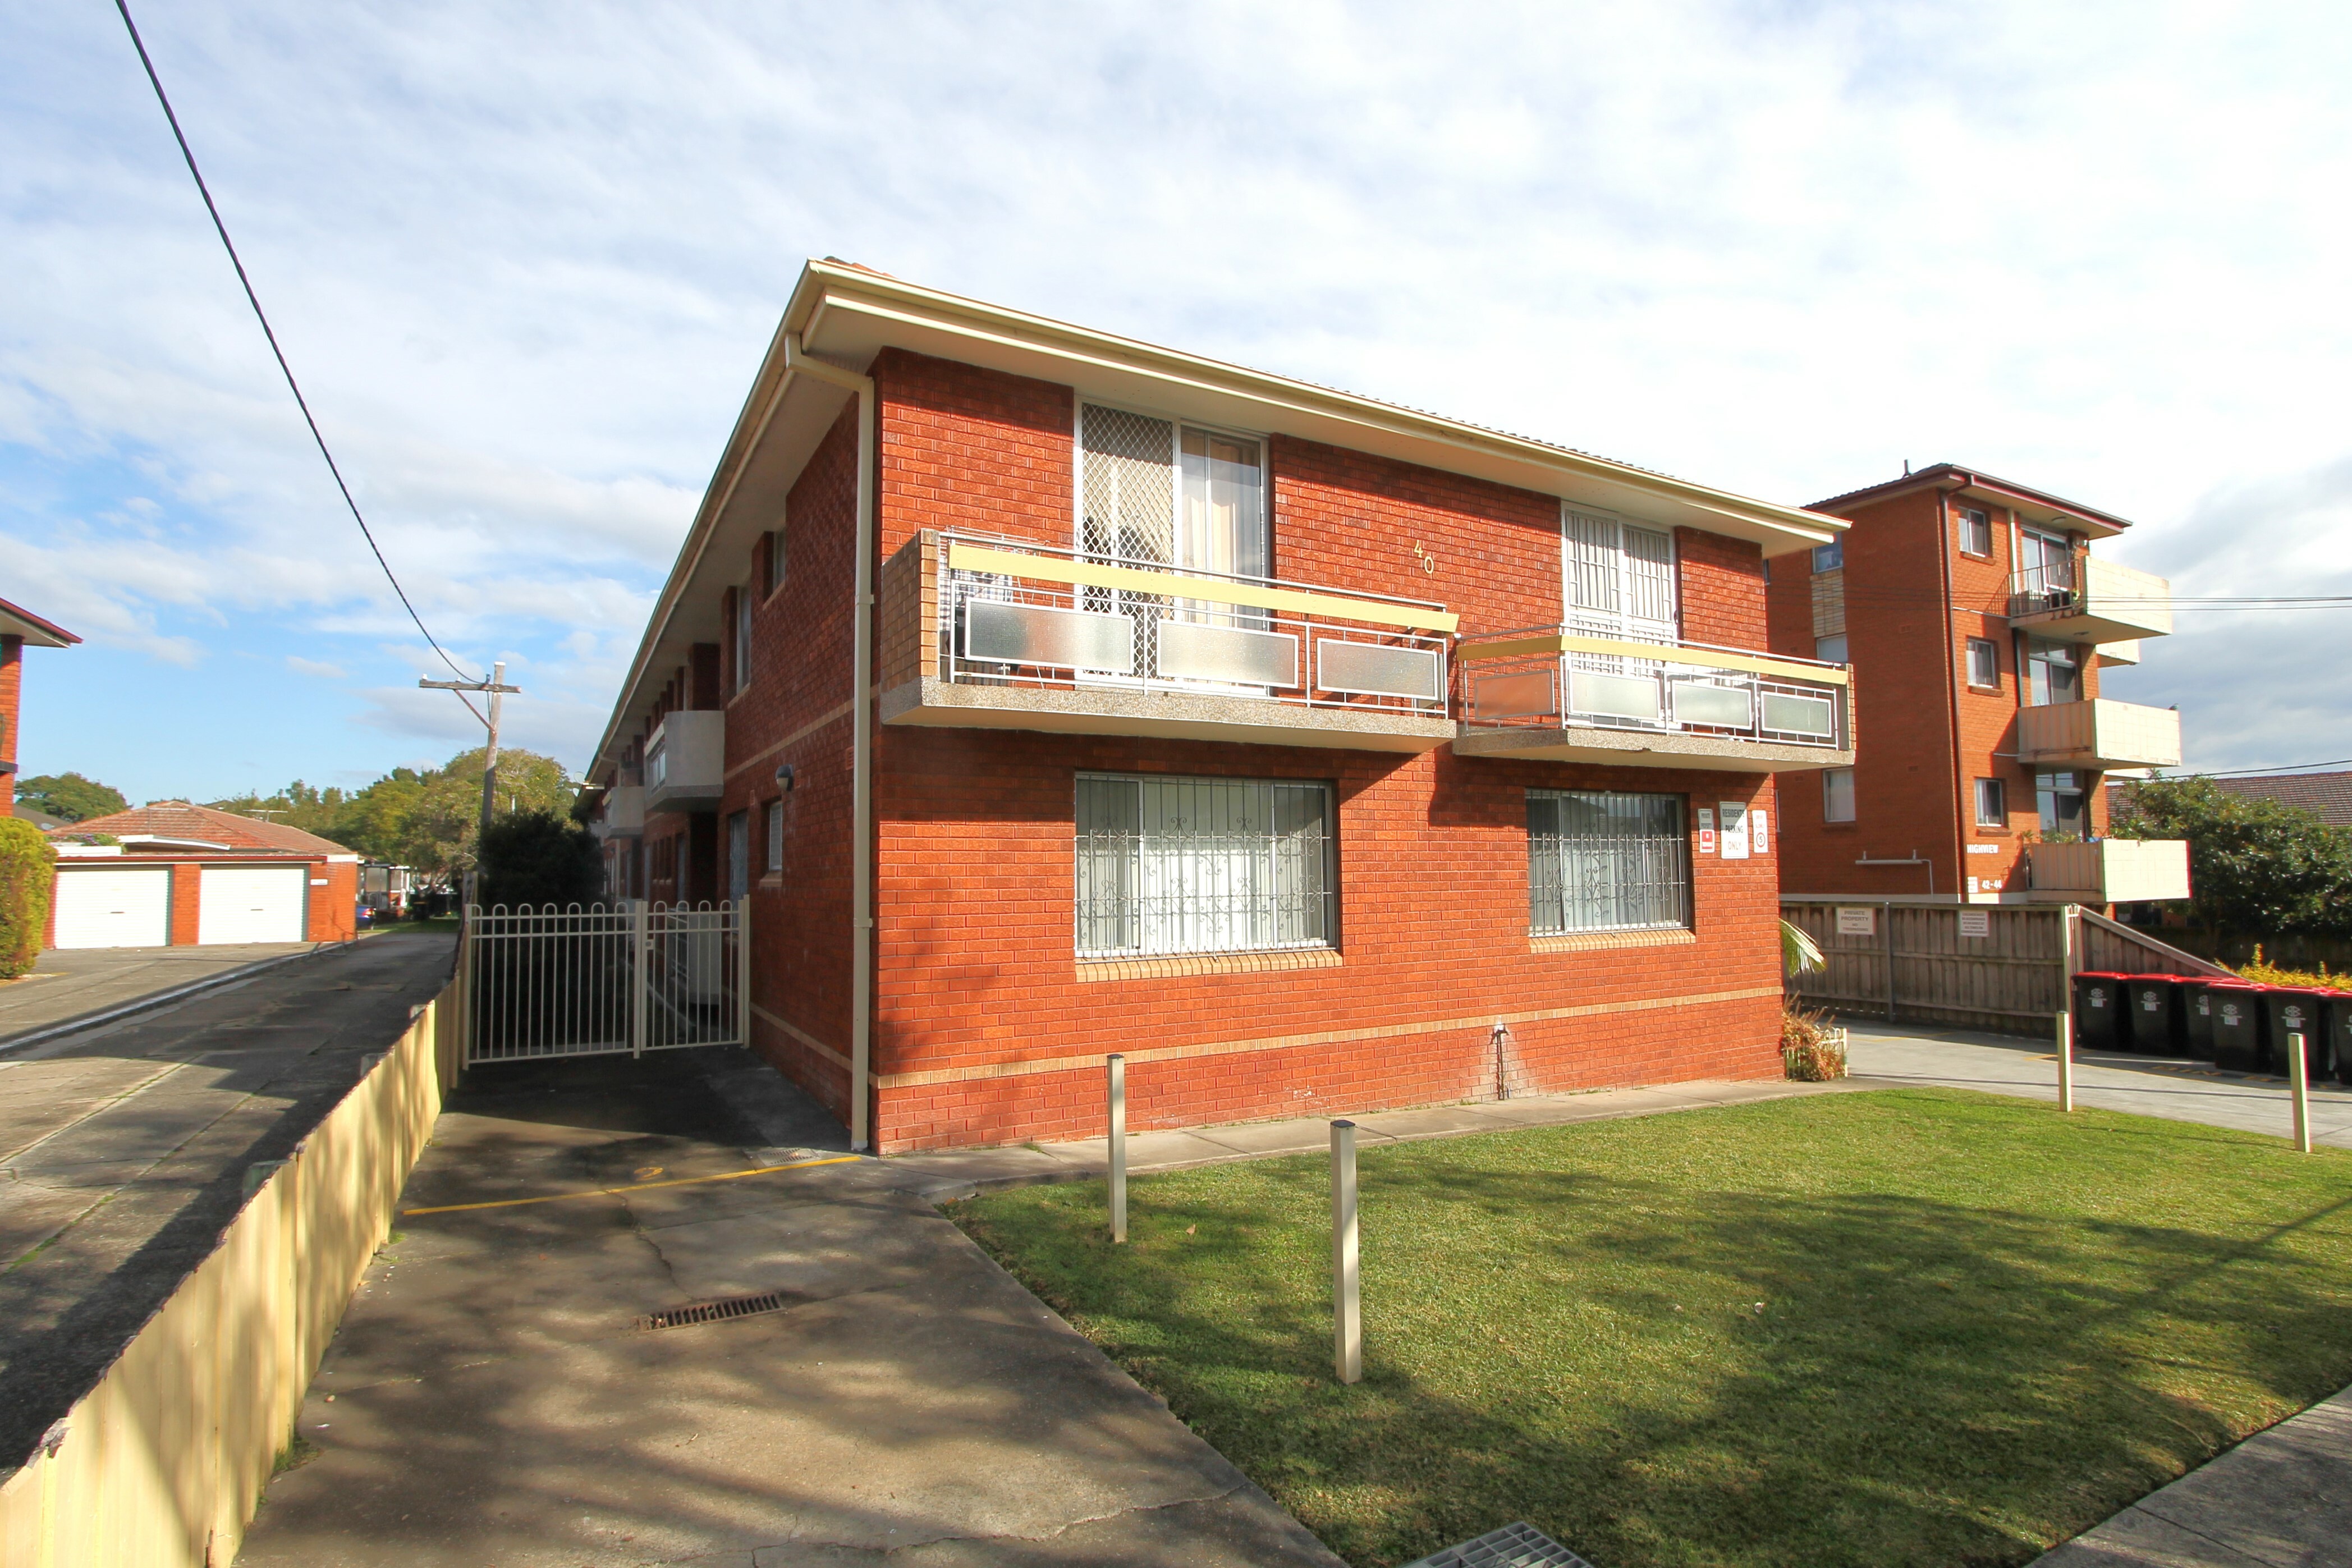 Unit 15/40 Fairmount St, Lakemba, NSW 2195, 2 Schlafzimmer, 1 Badezimmer, Unit